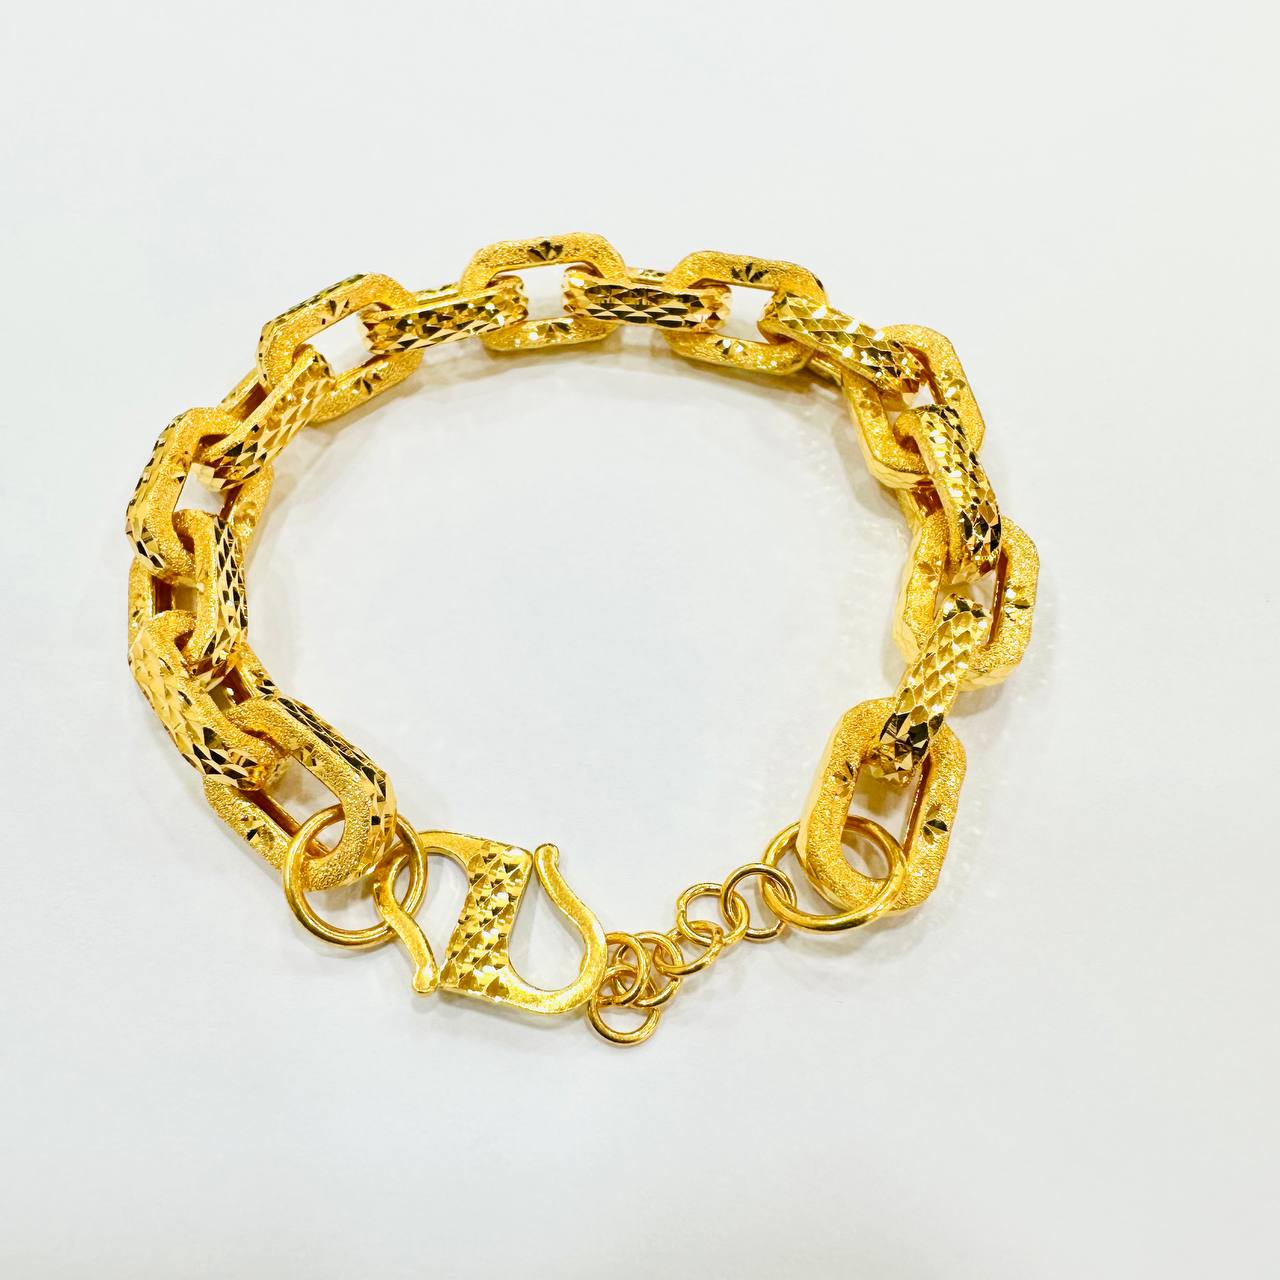 22K / 916 Gold Sandy Anchor / Wan Zi Bracelet-916 gold-Best Gold Shop